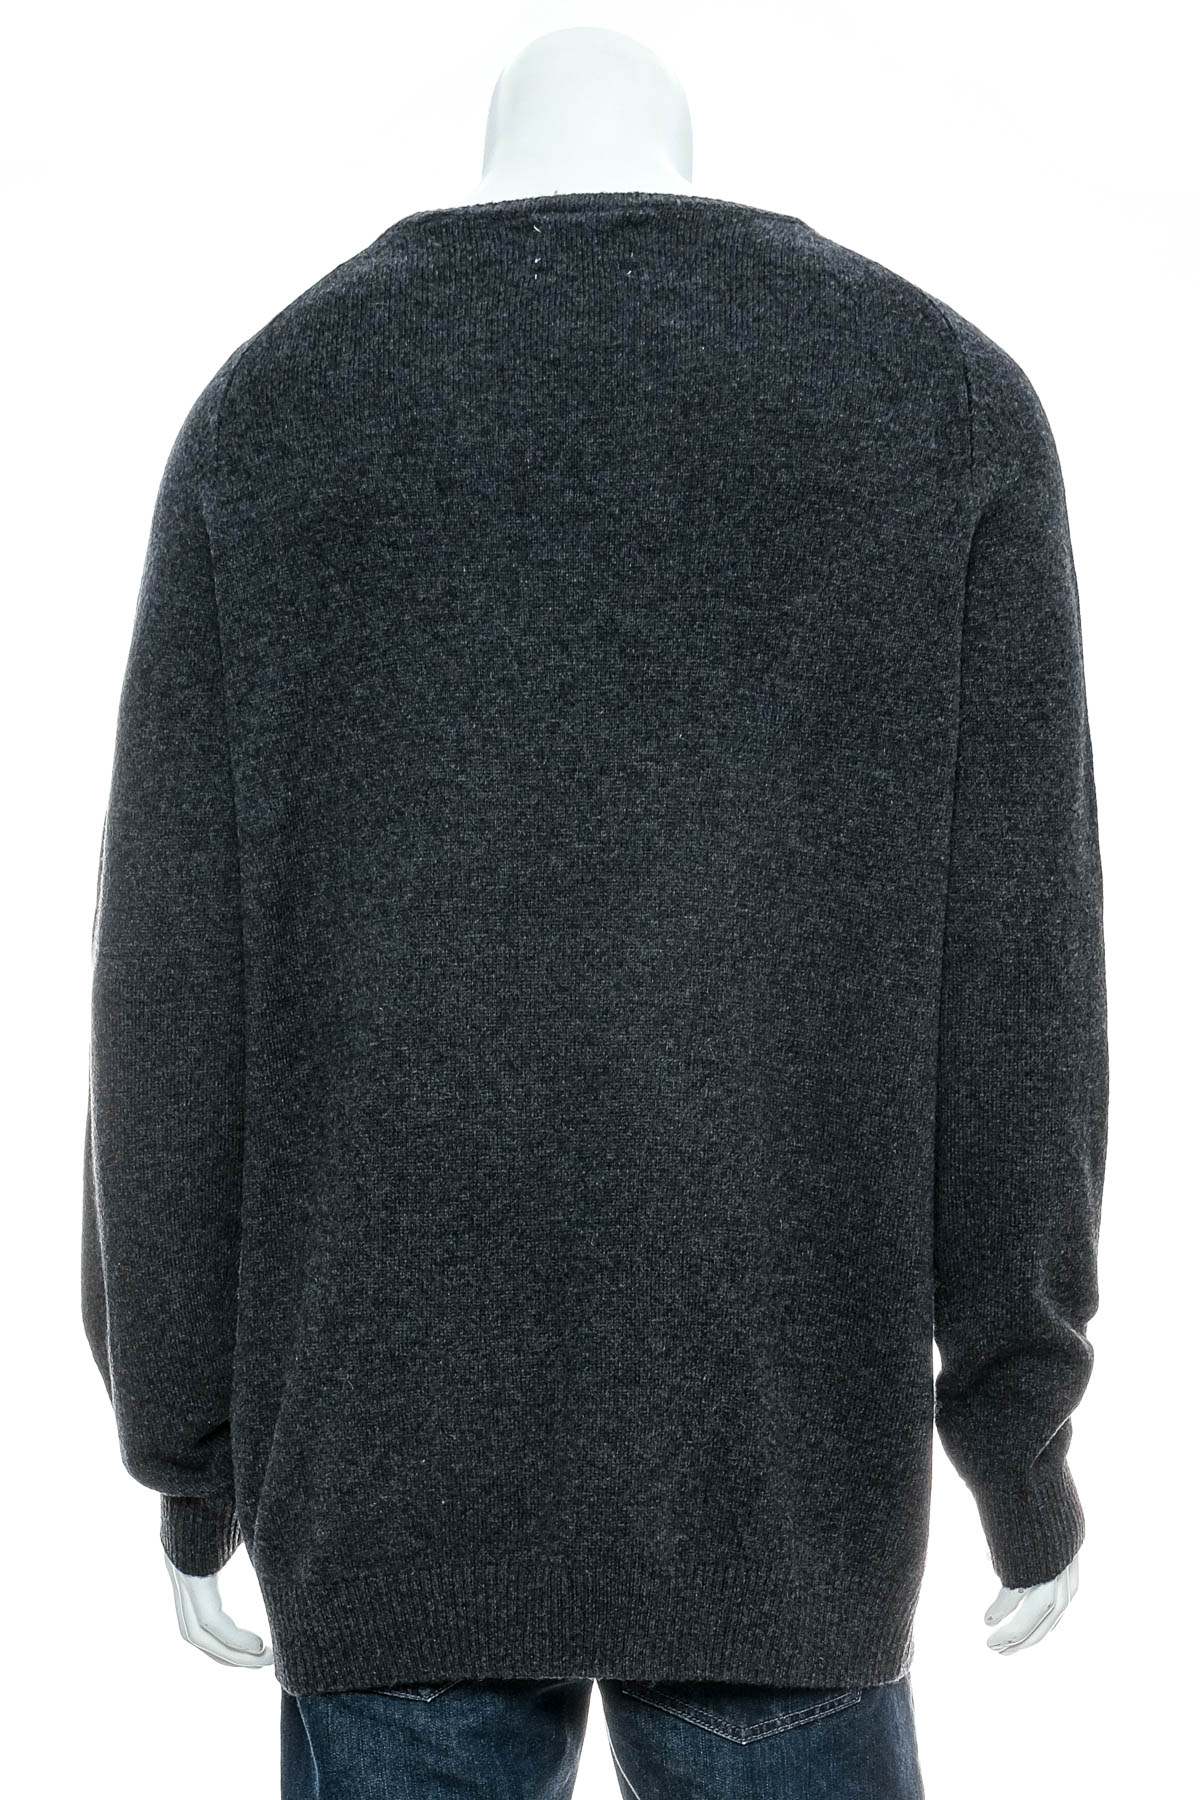 Men's sweater - C&A - 1